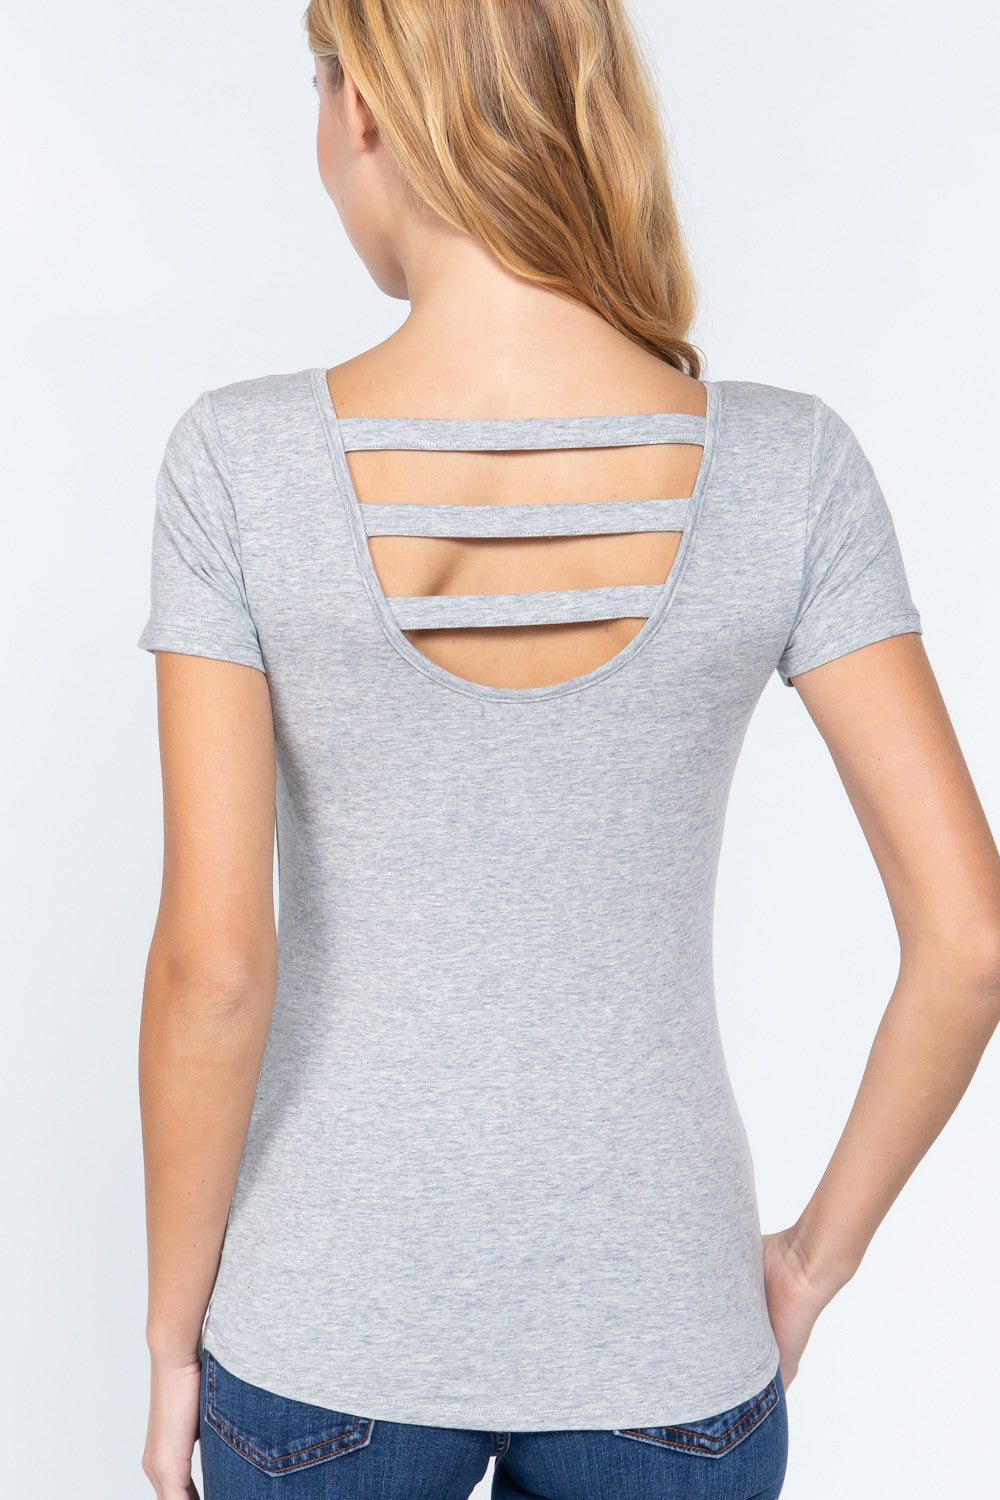 Short Sleeve Top with Zipper Pocket in Heather Grey